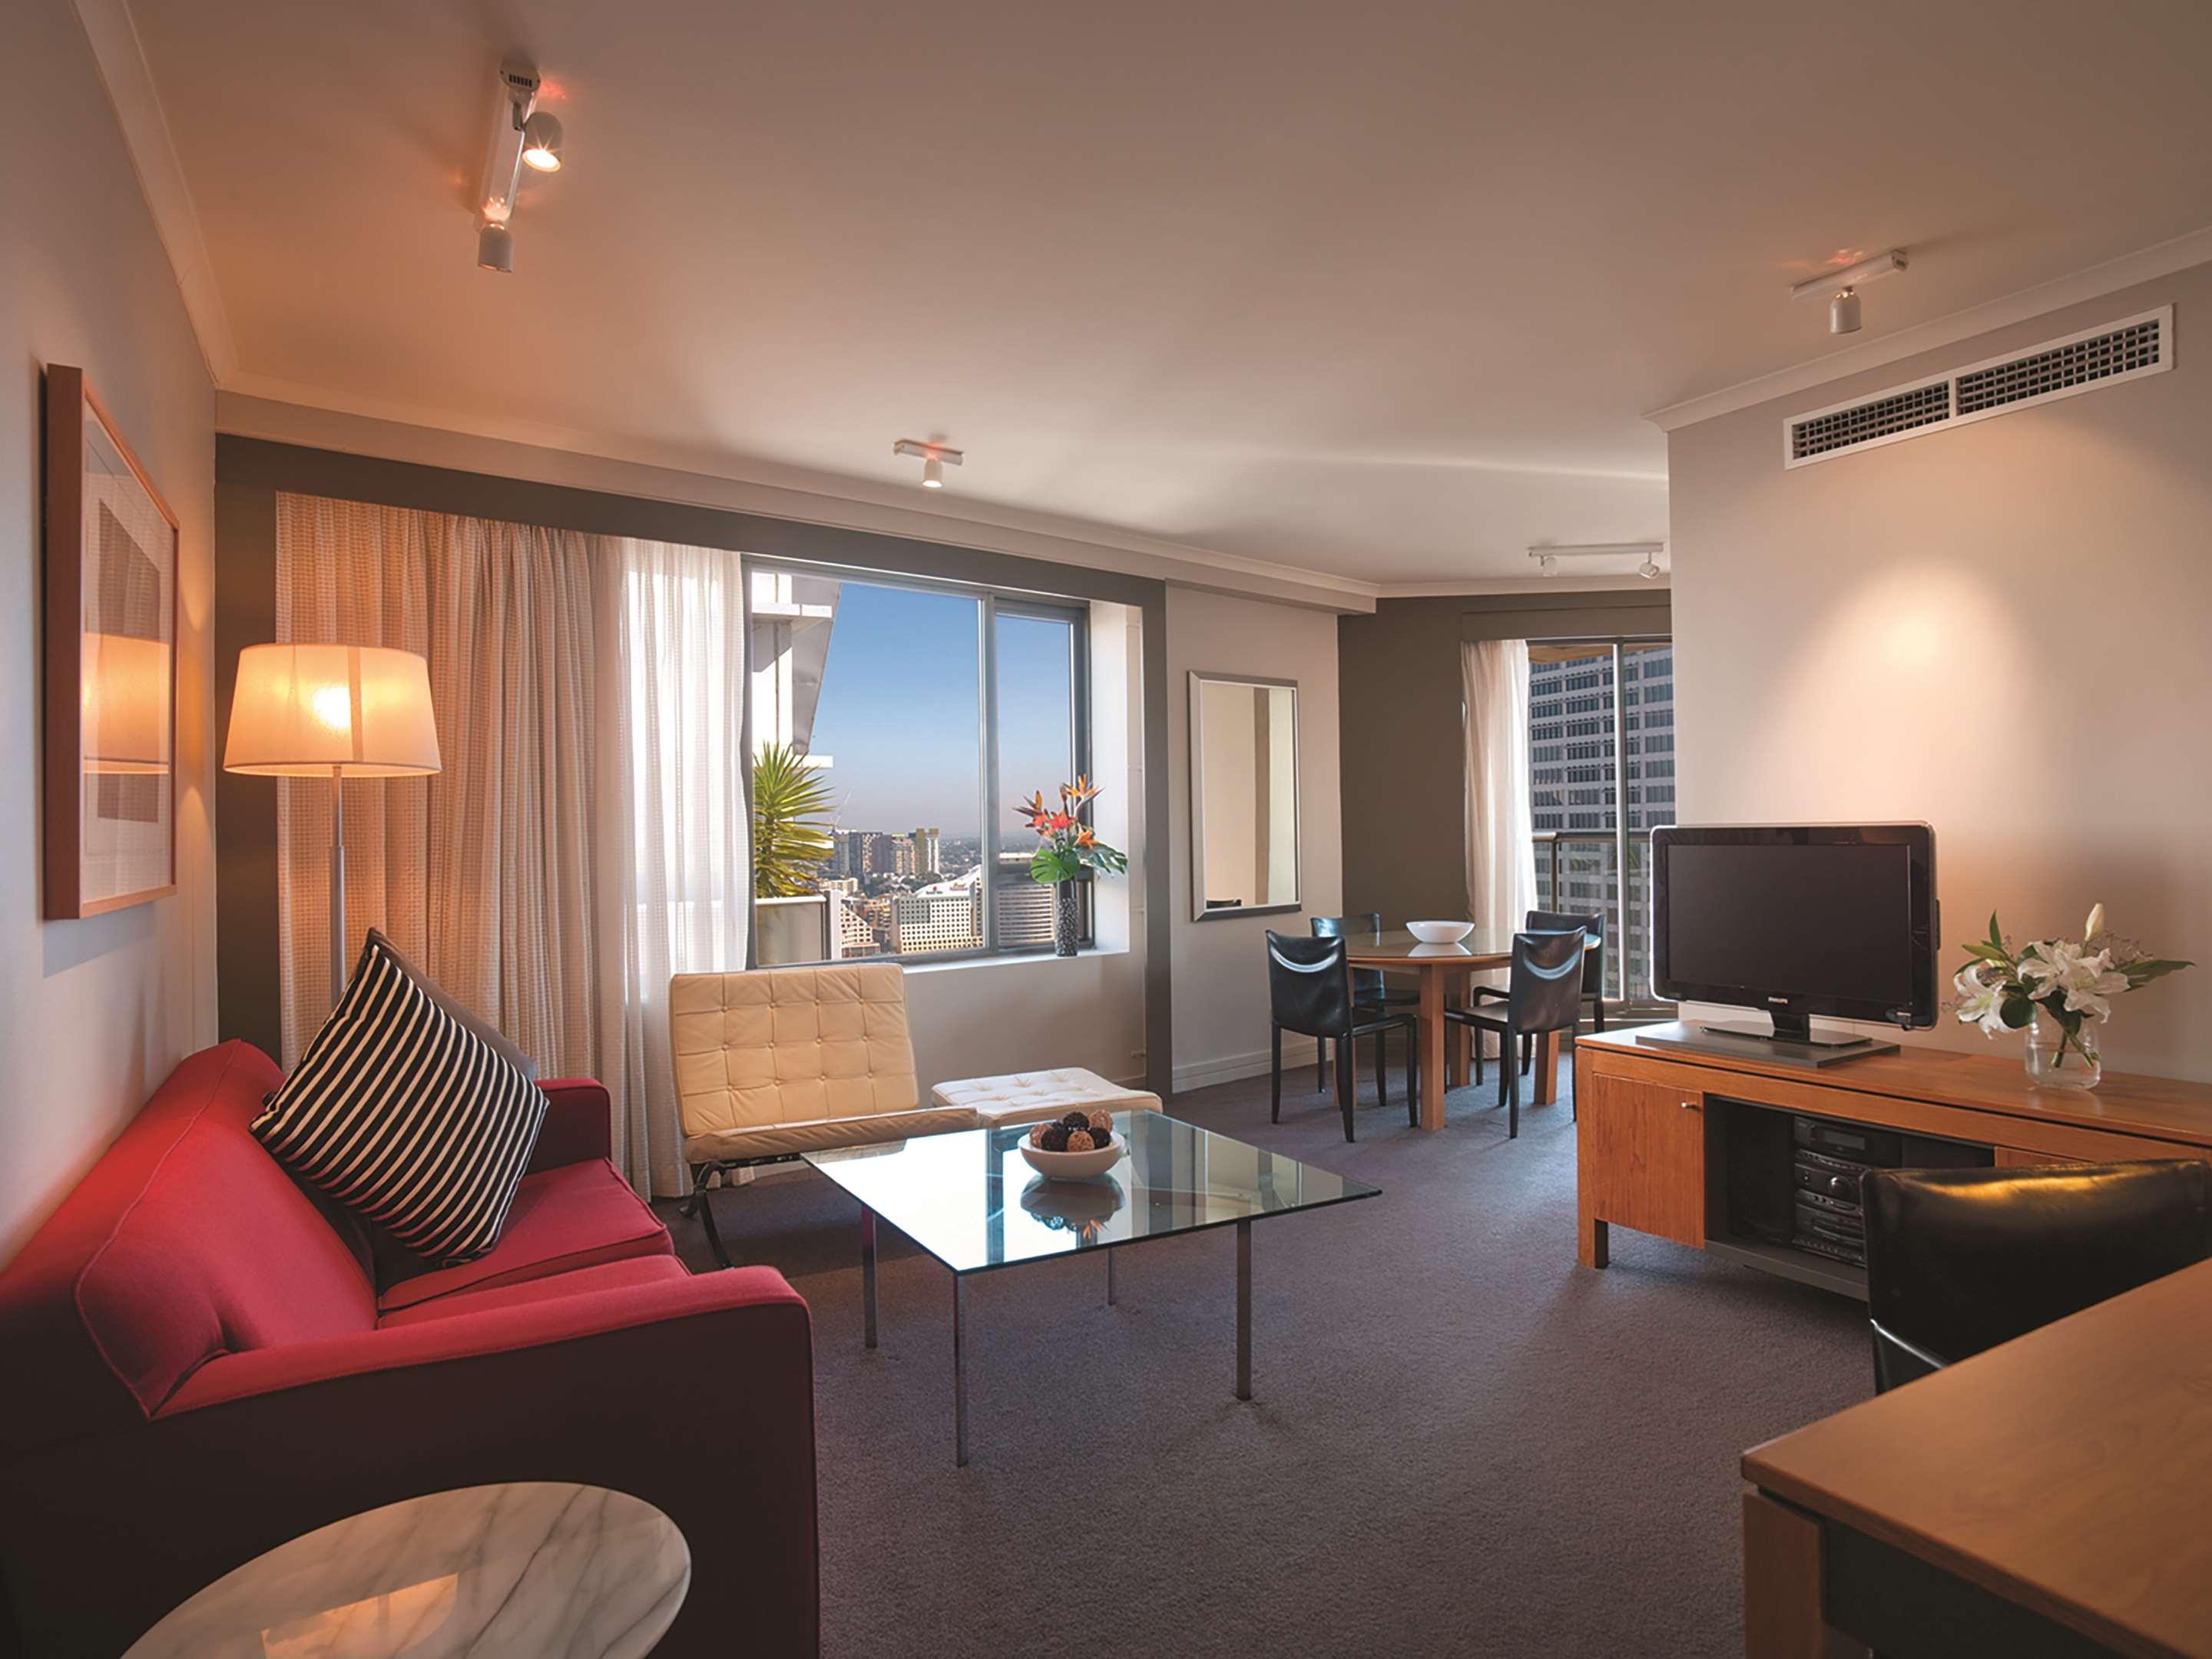 Adina Apartment Hotel Sydney Town Hall Sydney Nsw Australia Compare Deals